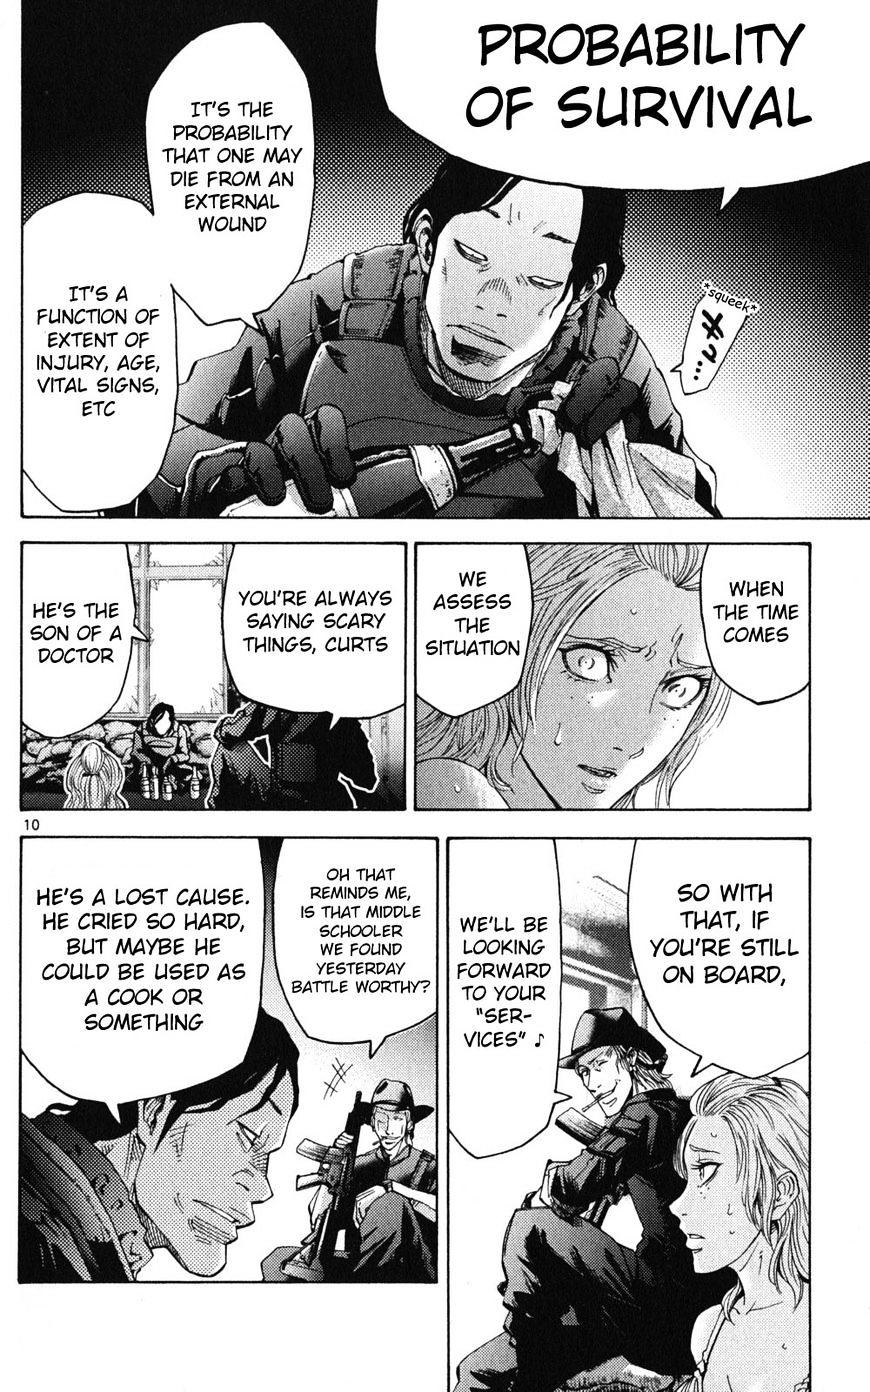 Imawa No Kuni No Alice Chapter 49.1 : Side Story 5 - King Of Spades (1) page 9 - Mangakakalot